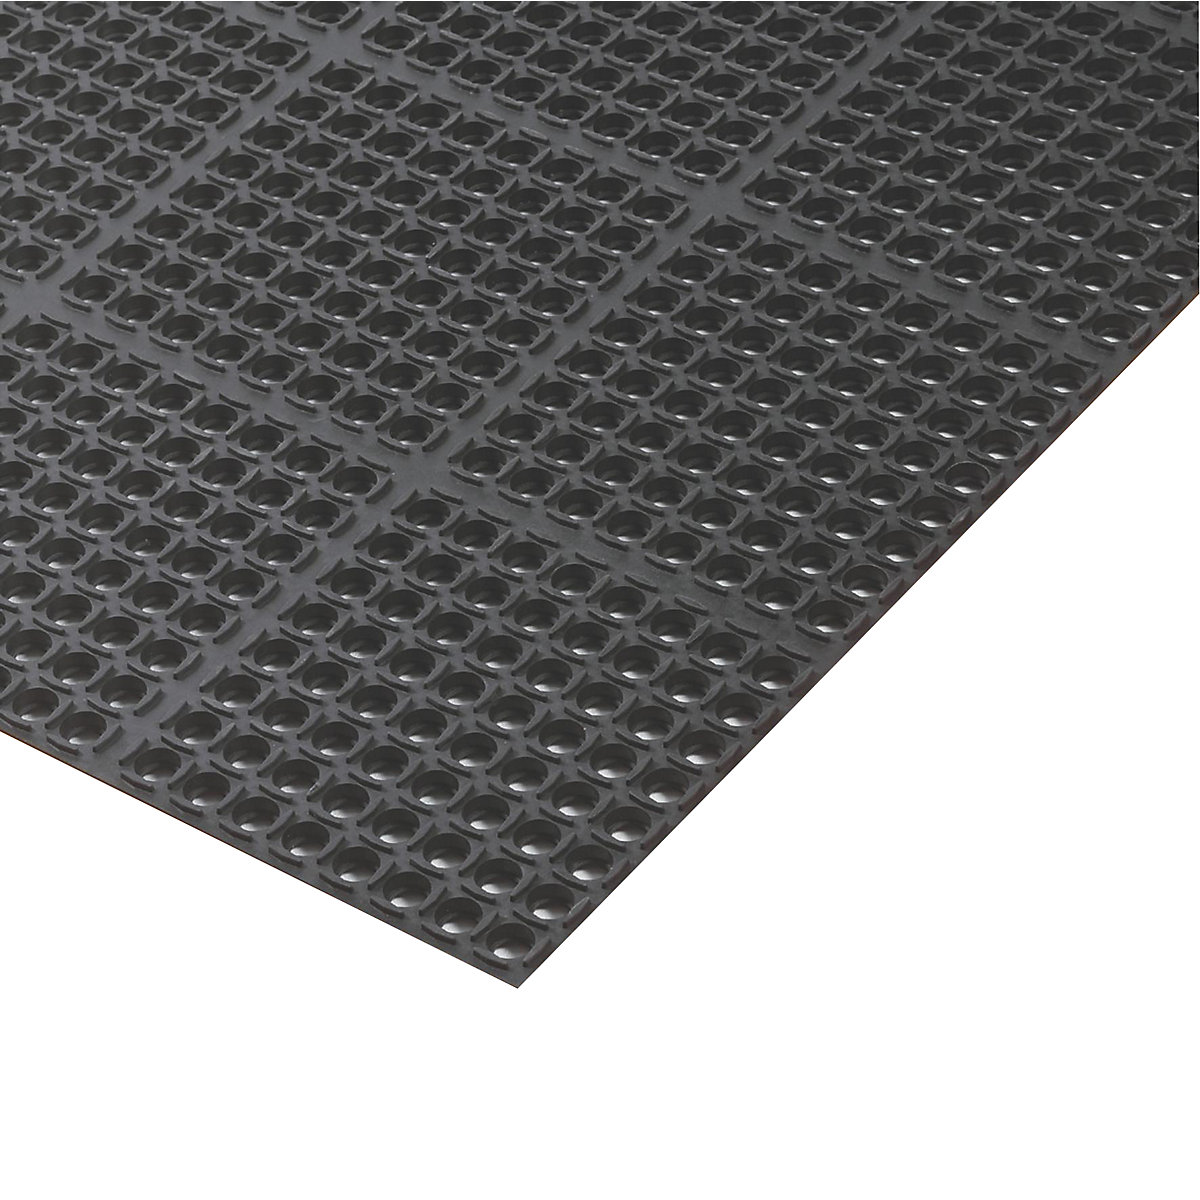 Safety Stance anti-fatigue matting – NOTRAX